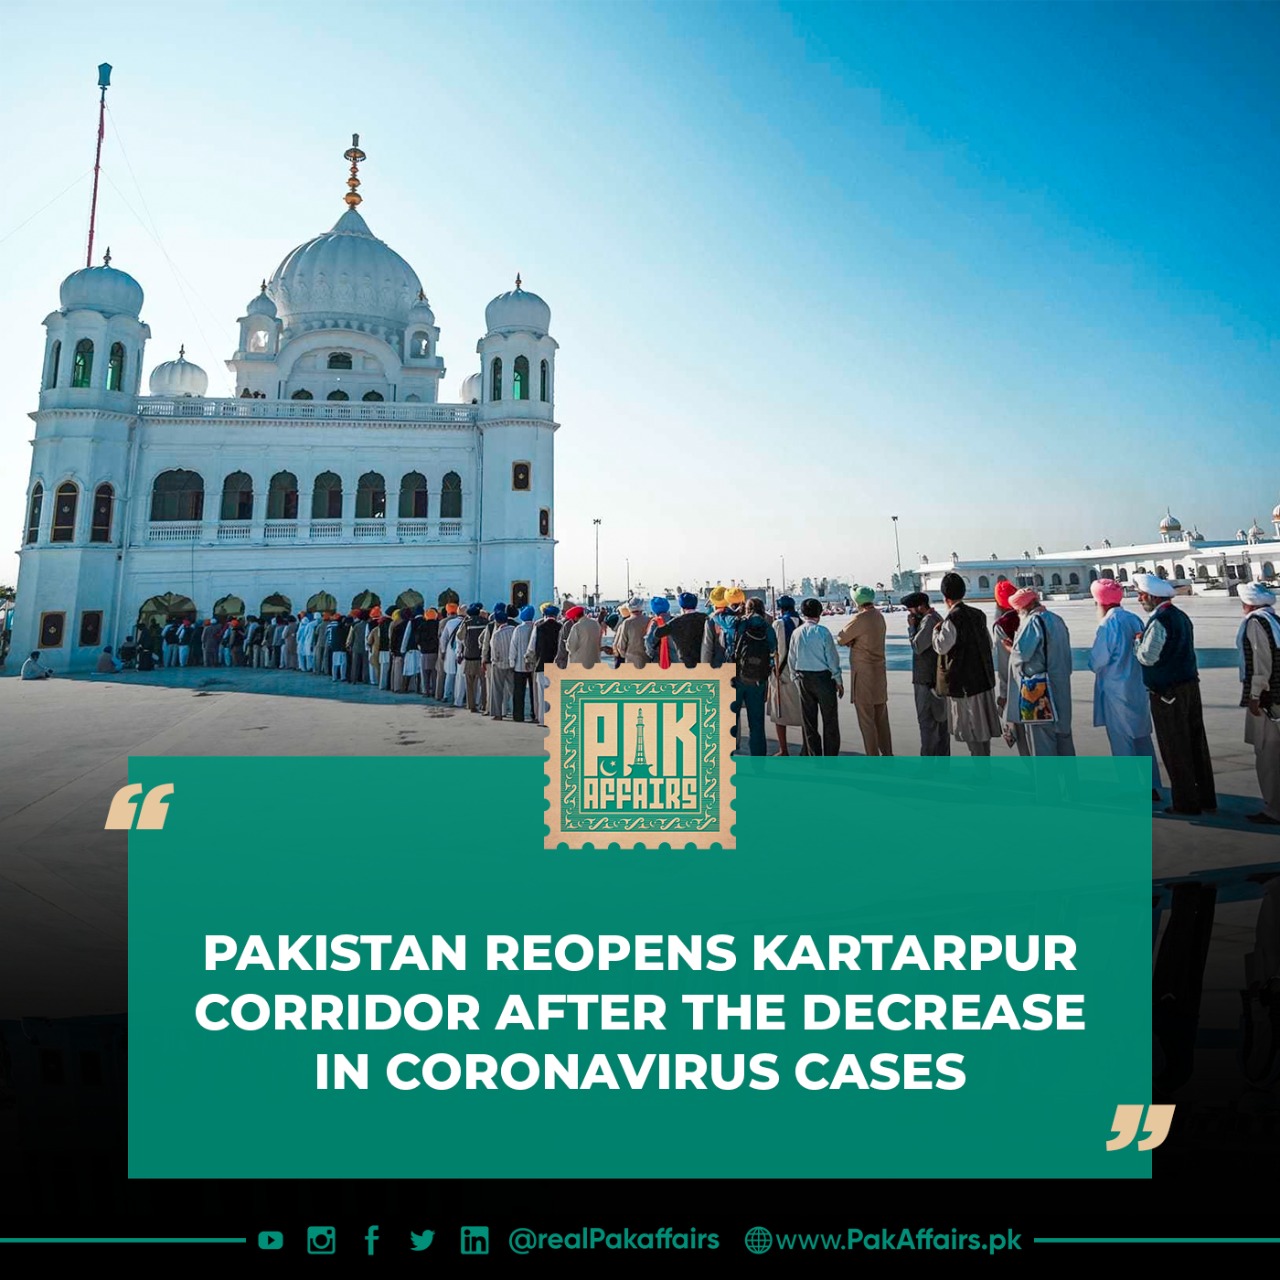 Pakistan reopens KartarPur corridor after the decrease in coronavirus cases